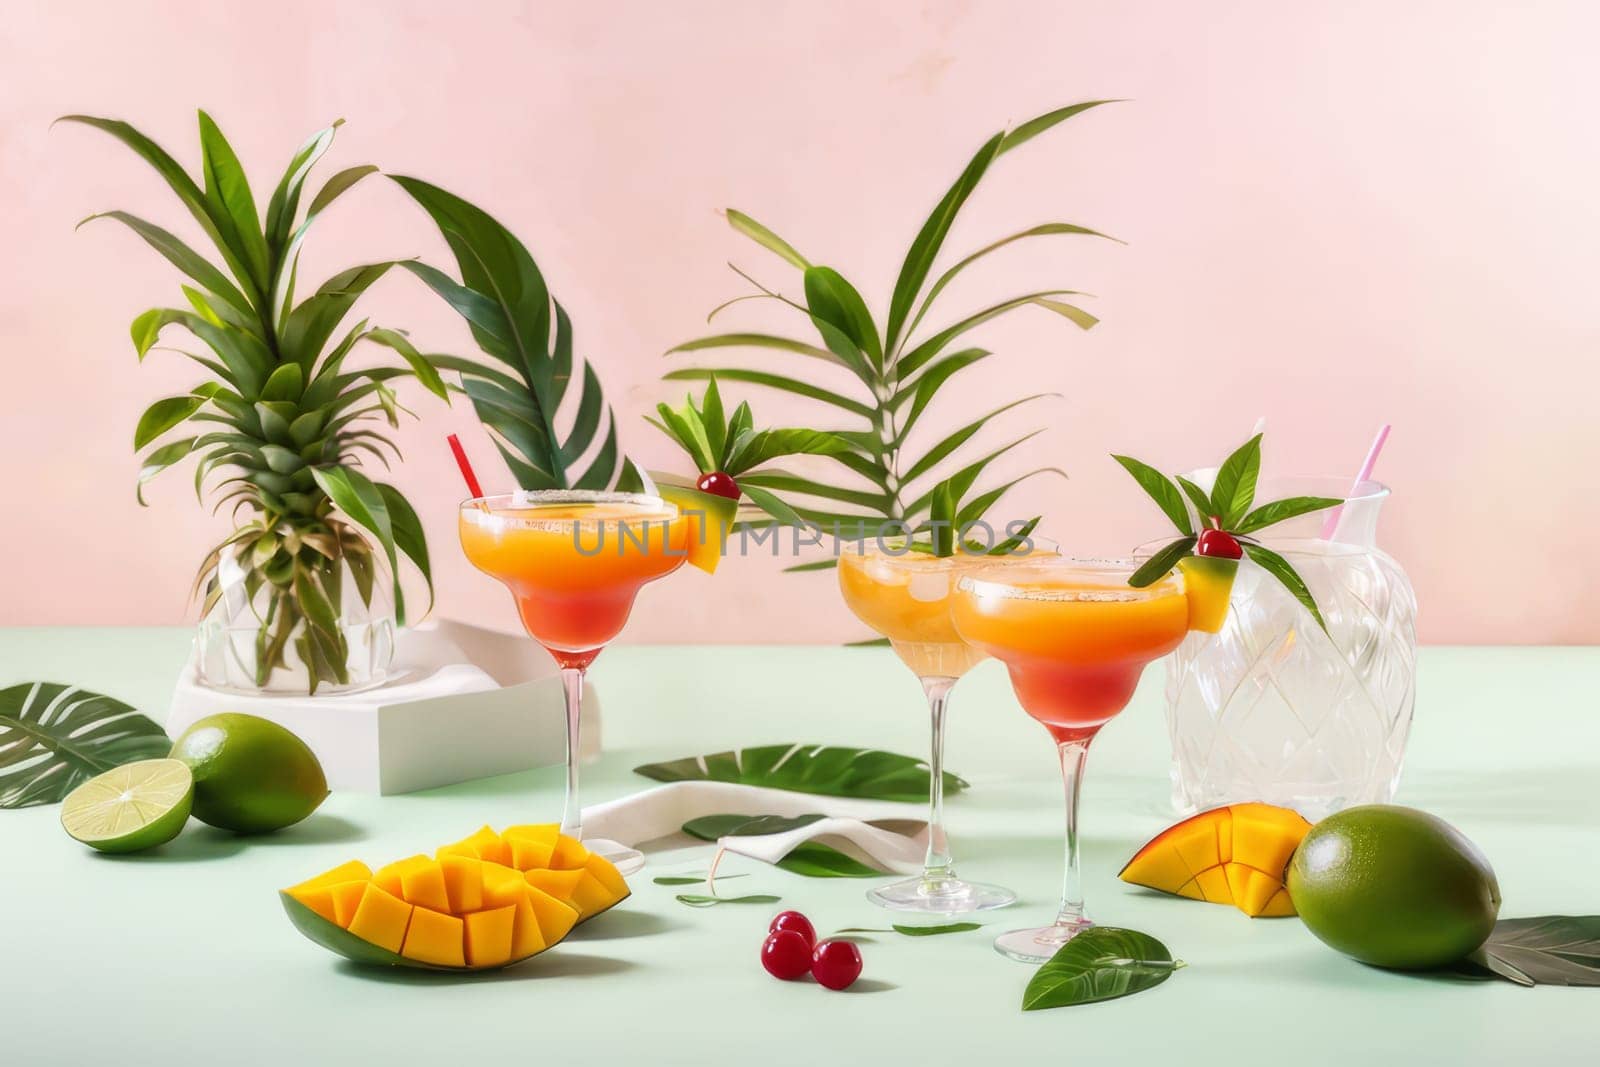 Refreshing mangonada cocktail with fresh mango slices beautifully displayed on a vibrant green backdrop